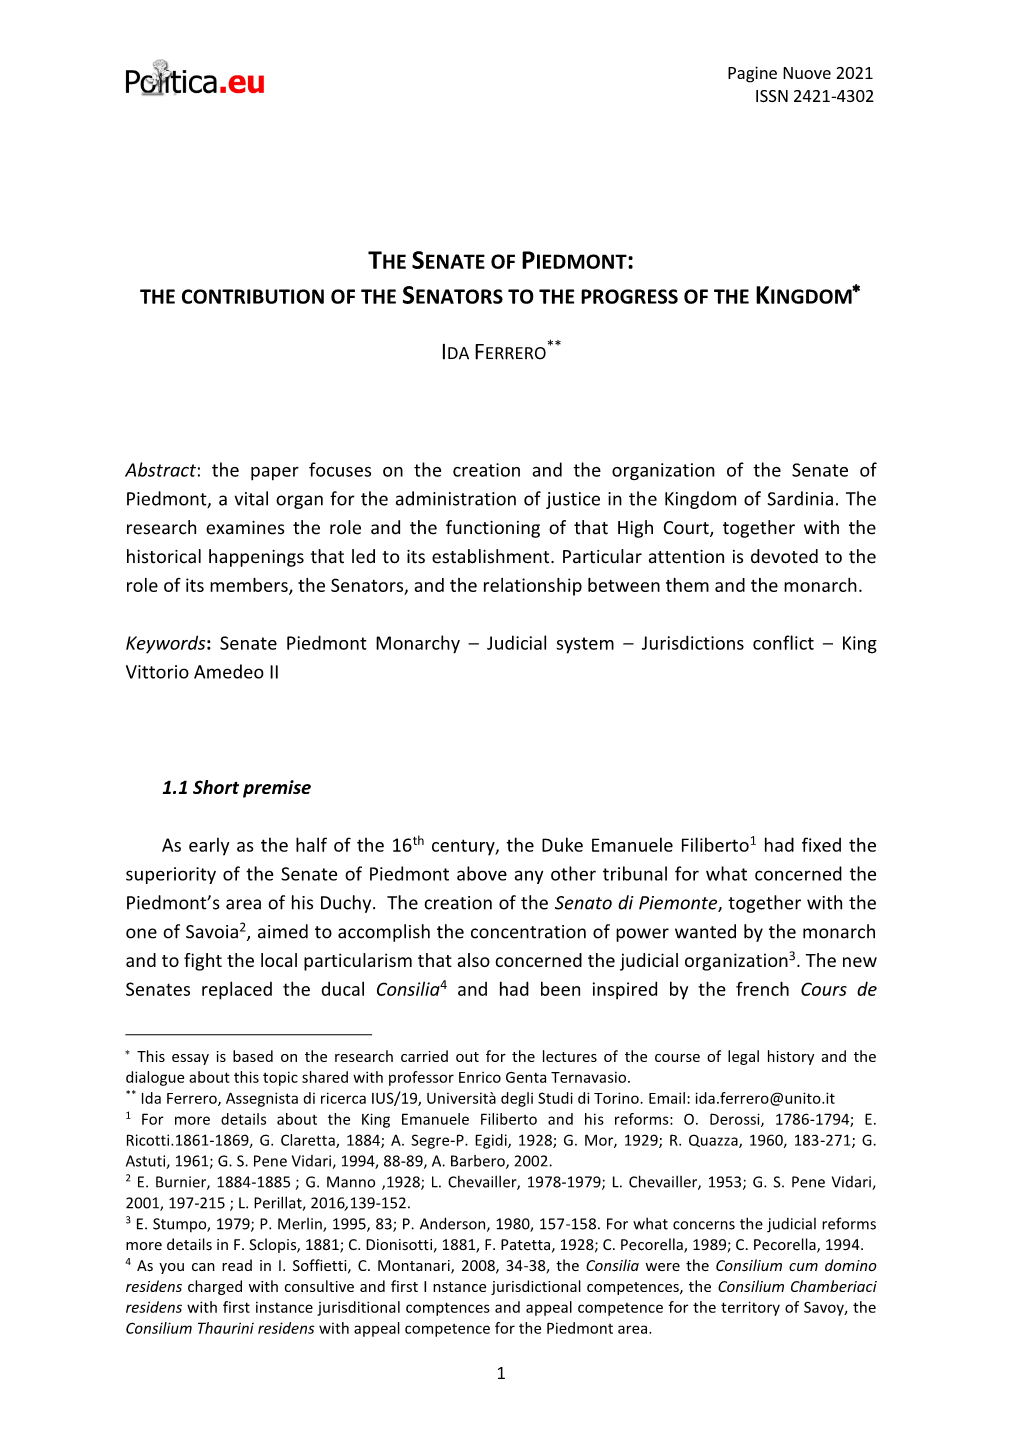 The Senate of Piedmont: the Contribution of the Senators to the Progress of the Kingdom